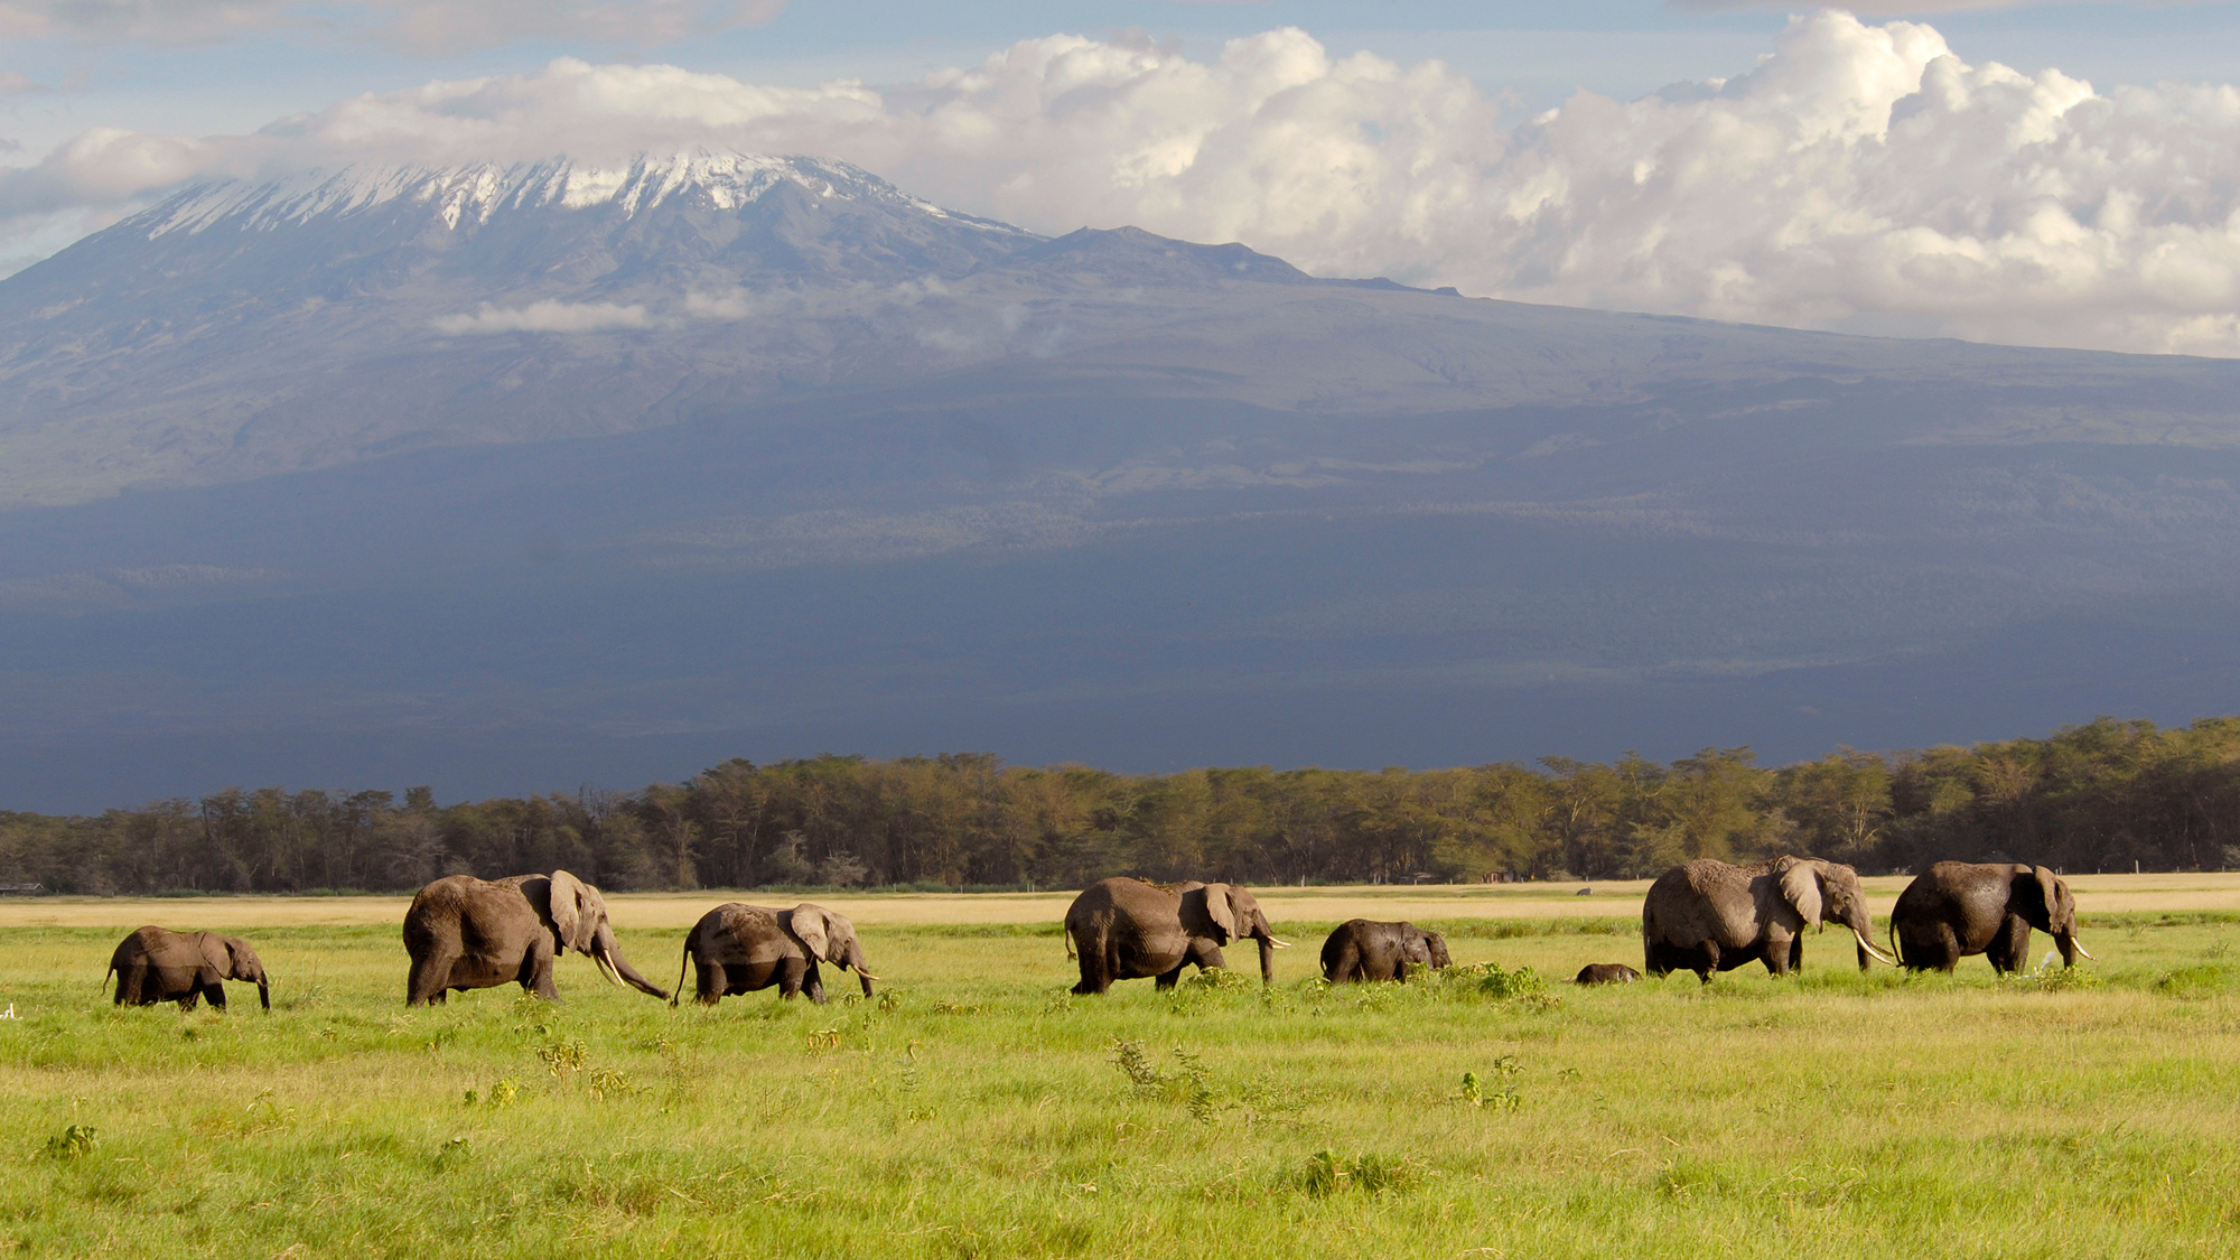 Elephants in front of Mt. Kilmanjaro